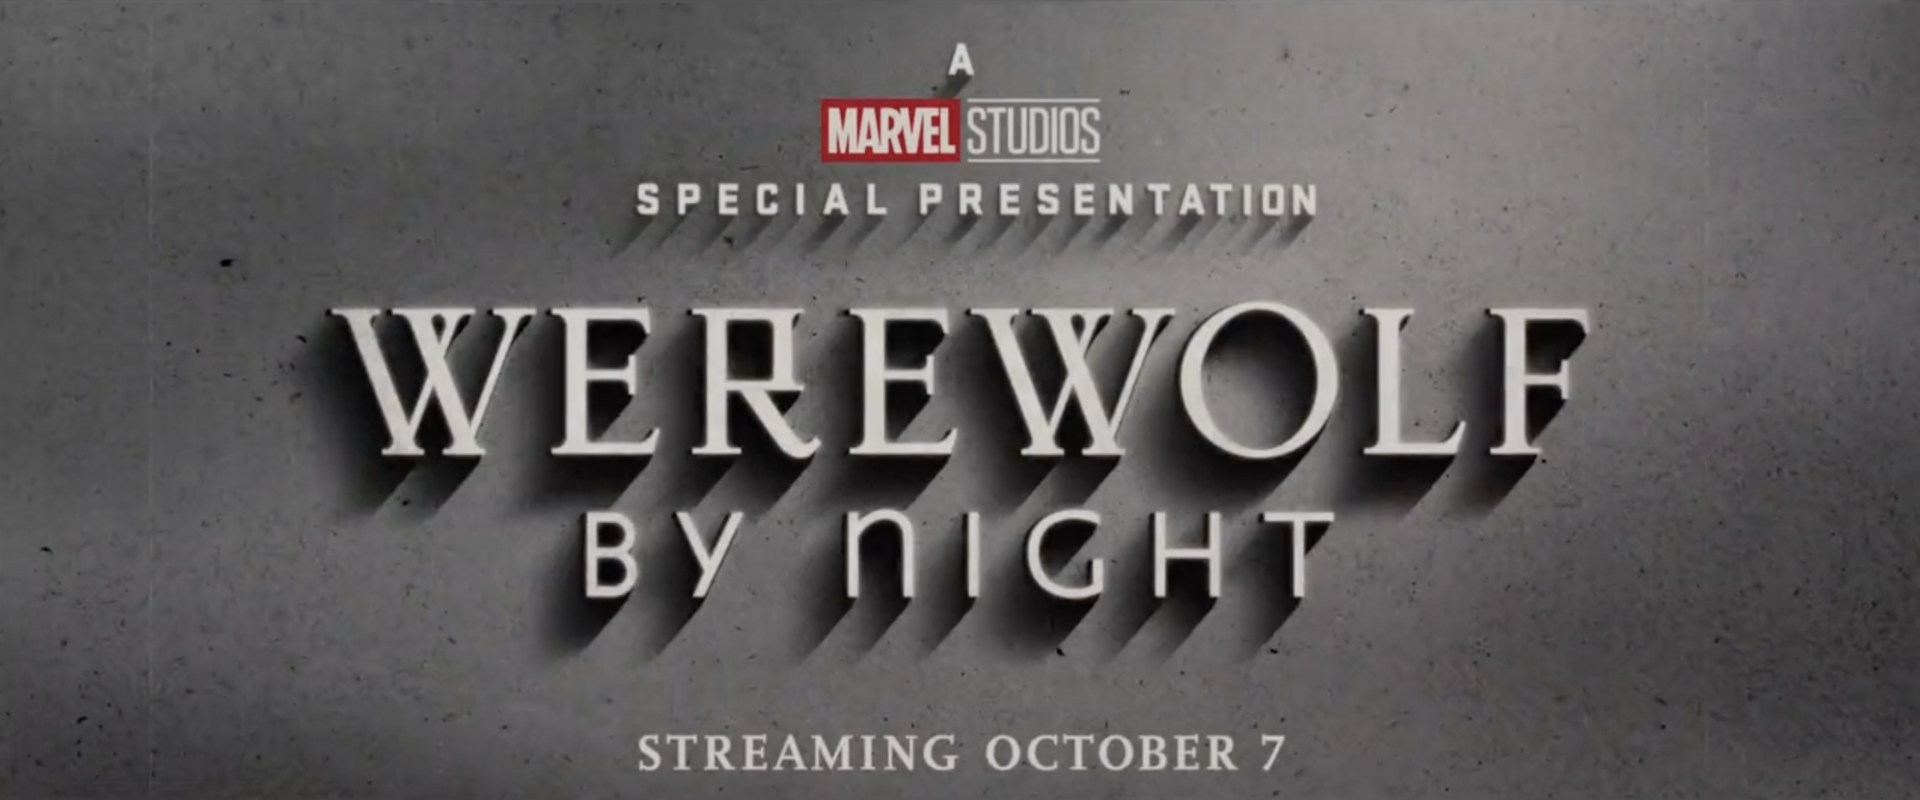 D23Expo podsumowanie panelu Marvel Studios Lucasfilm & 20th Century Fox Werewolf by night